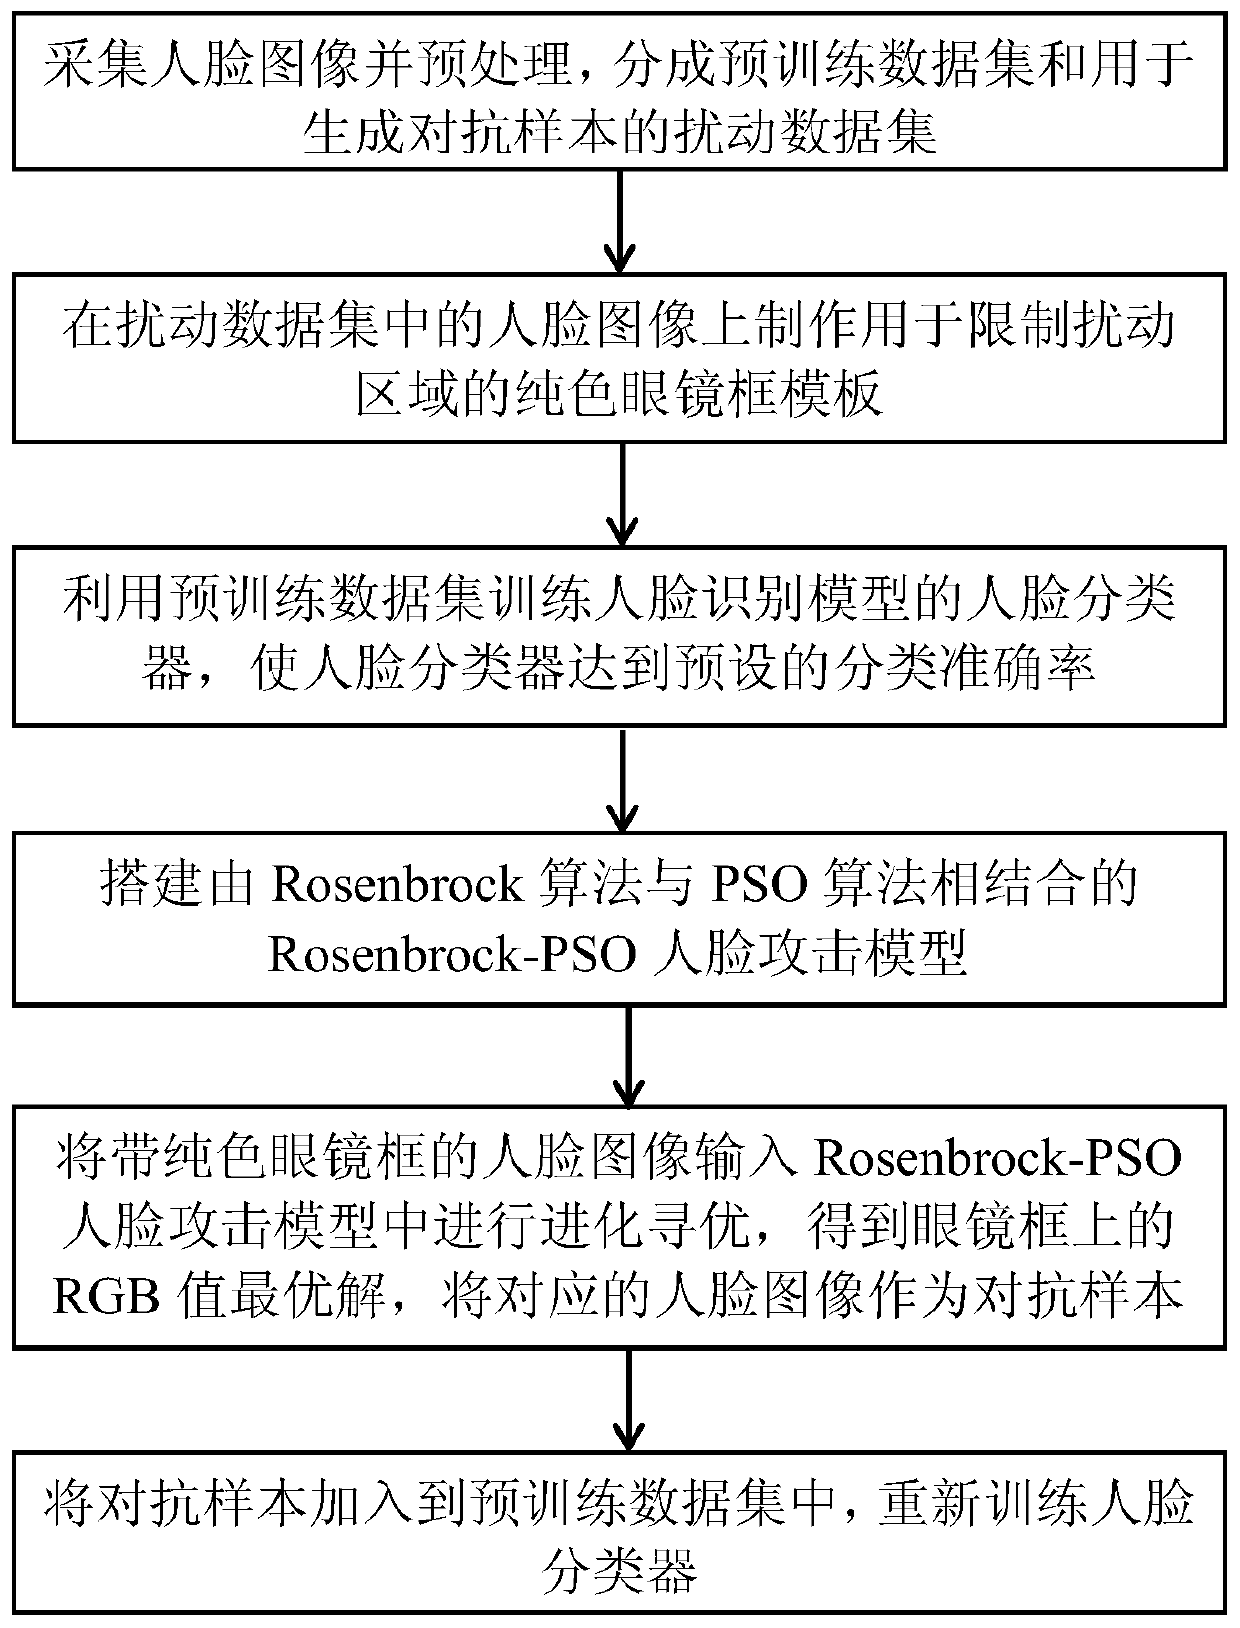 Face recognition attack defense method based on Rosenbrock-PSO